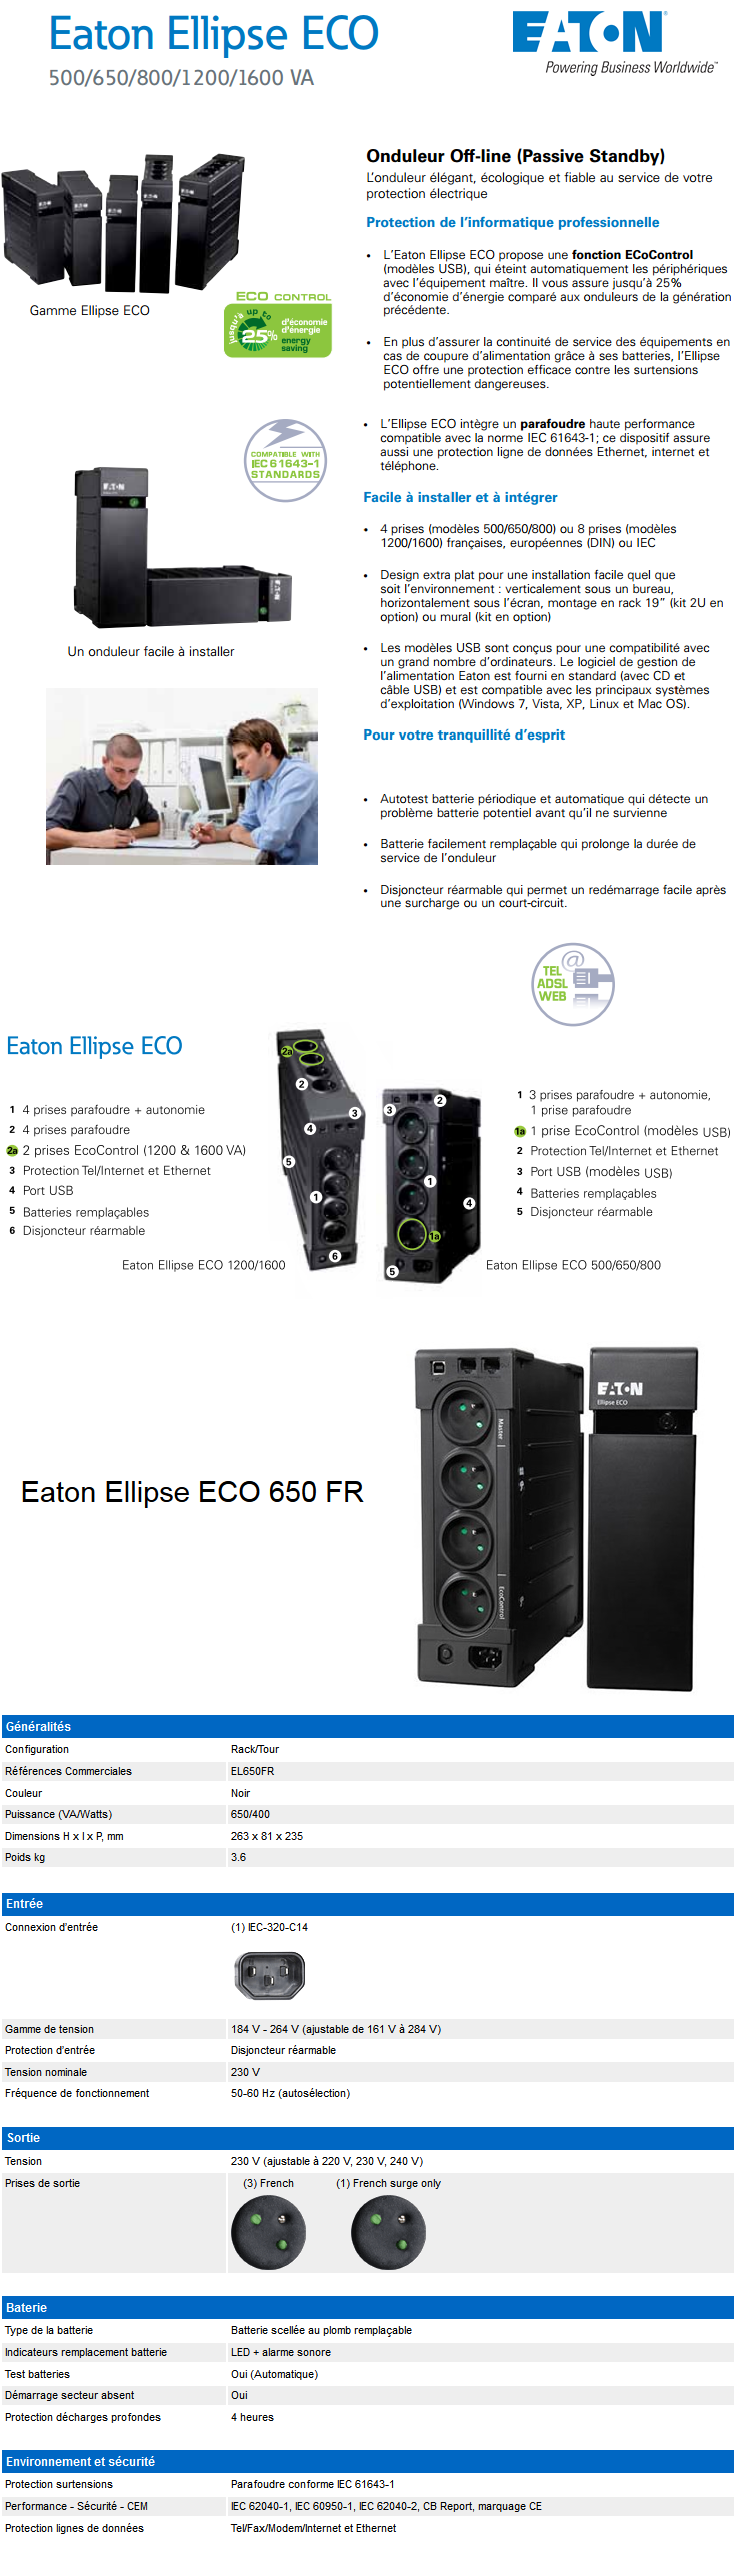 Acheter Onduleur OFF-Line Eaton Ellipse ECO 650 FR (EL650FR) maroc